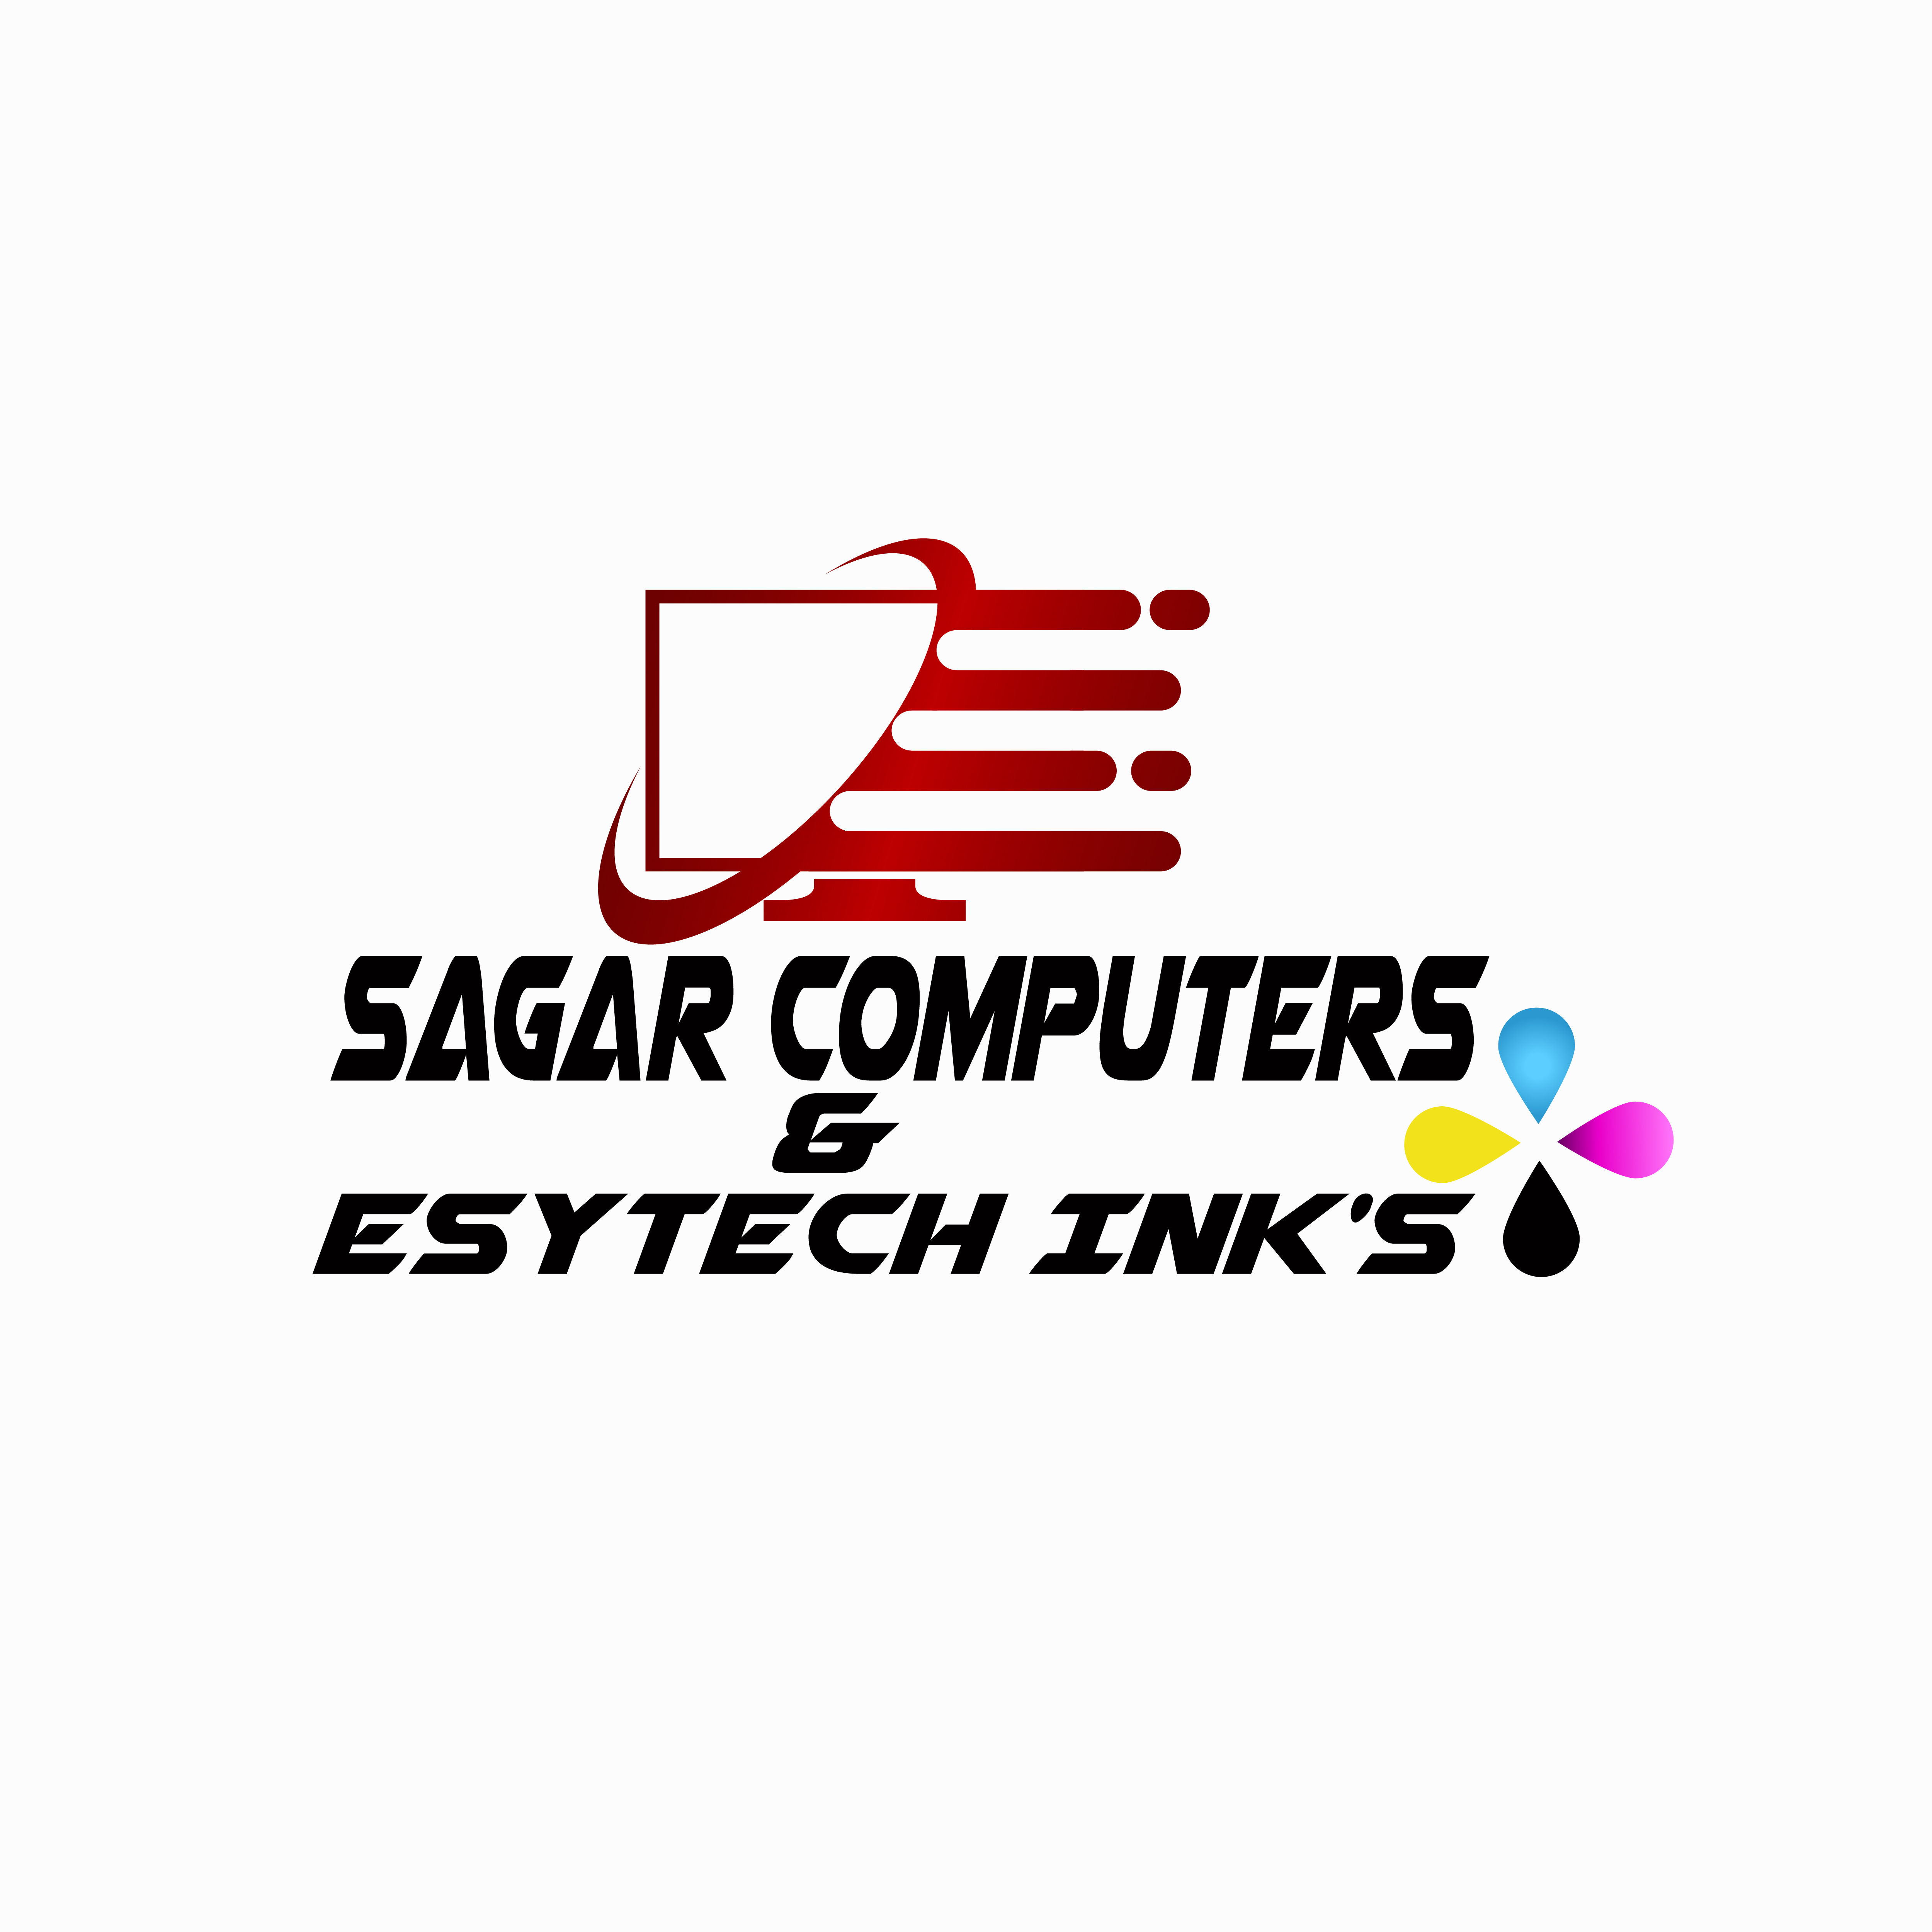 SAGAR COMPUTERS